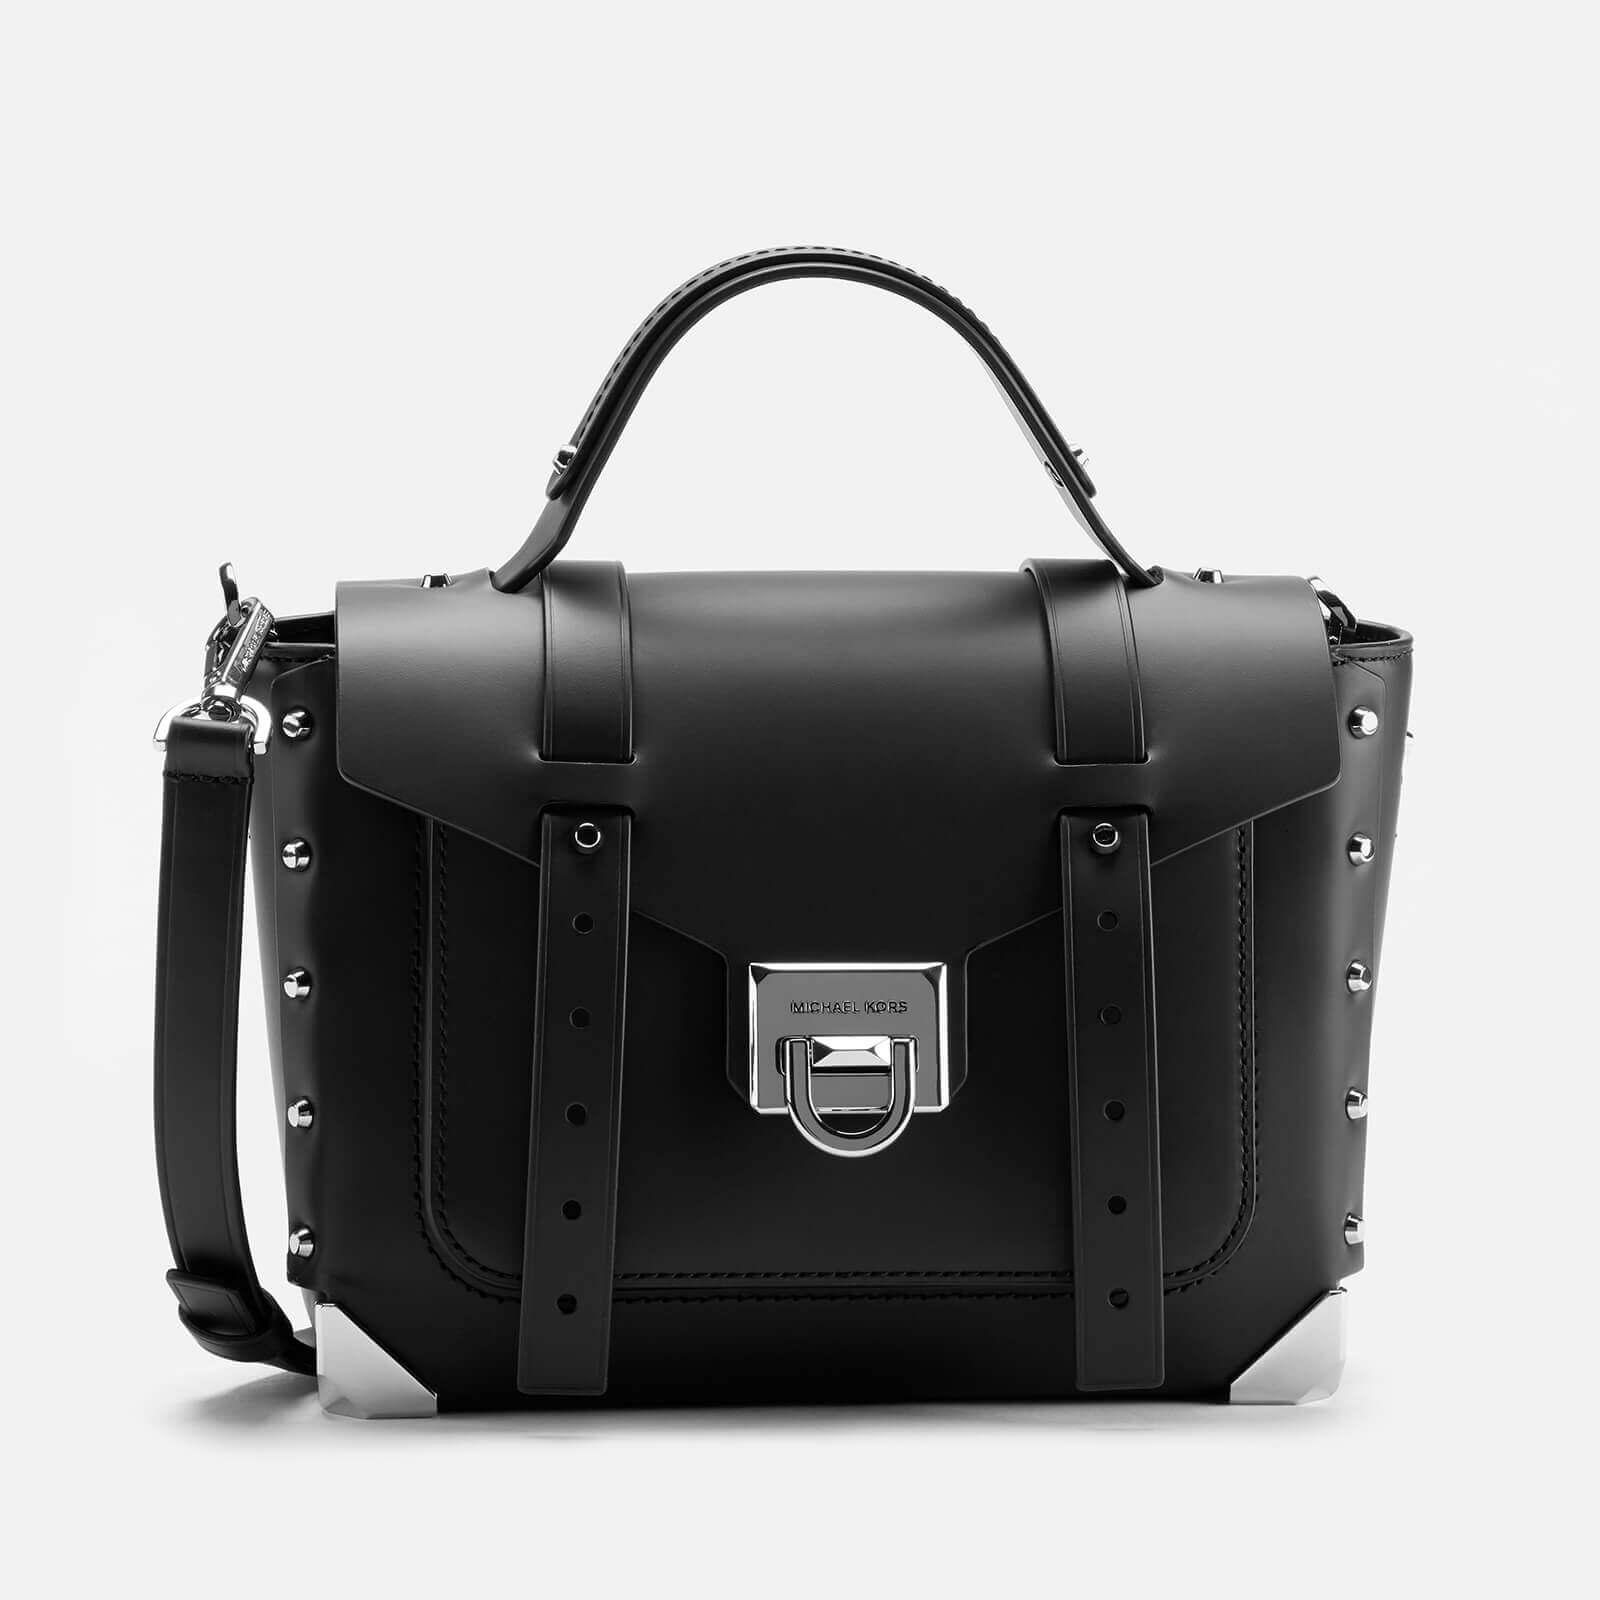 mk black satchel